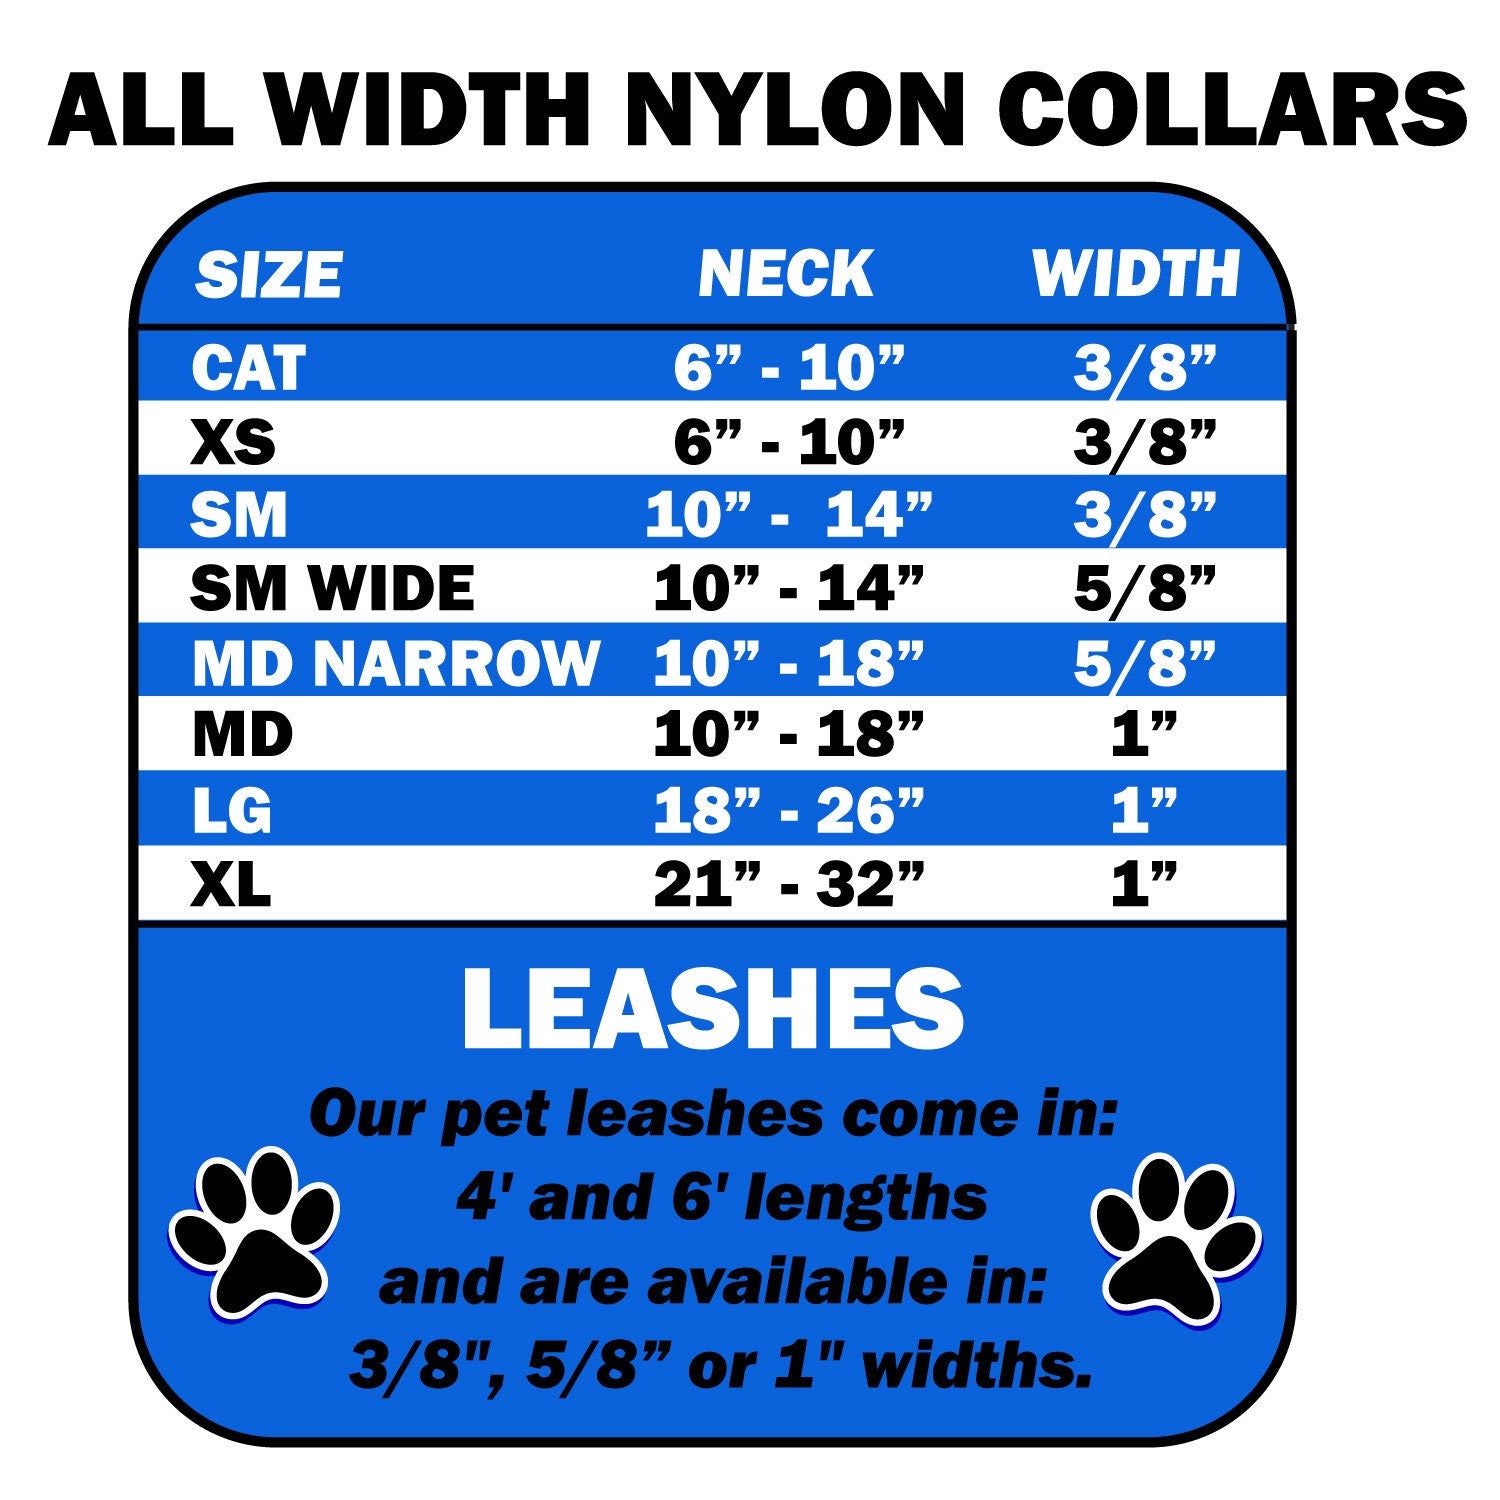 Christmas Pet Dog & Cat Nylon Collar or Leash, "Candy Cane Bones"